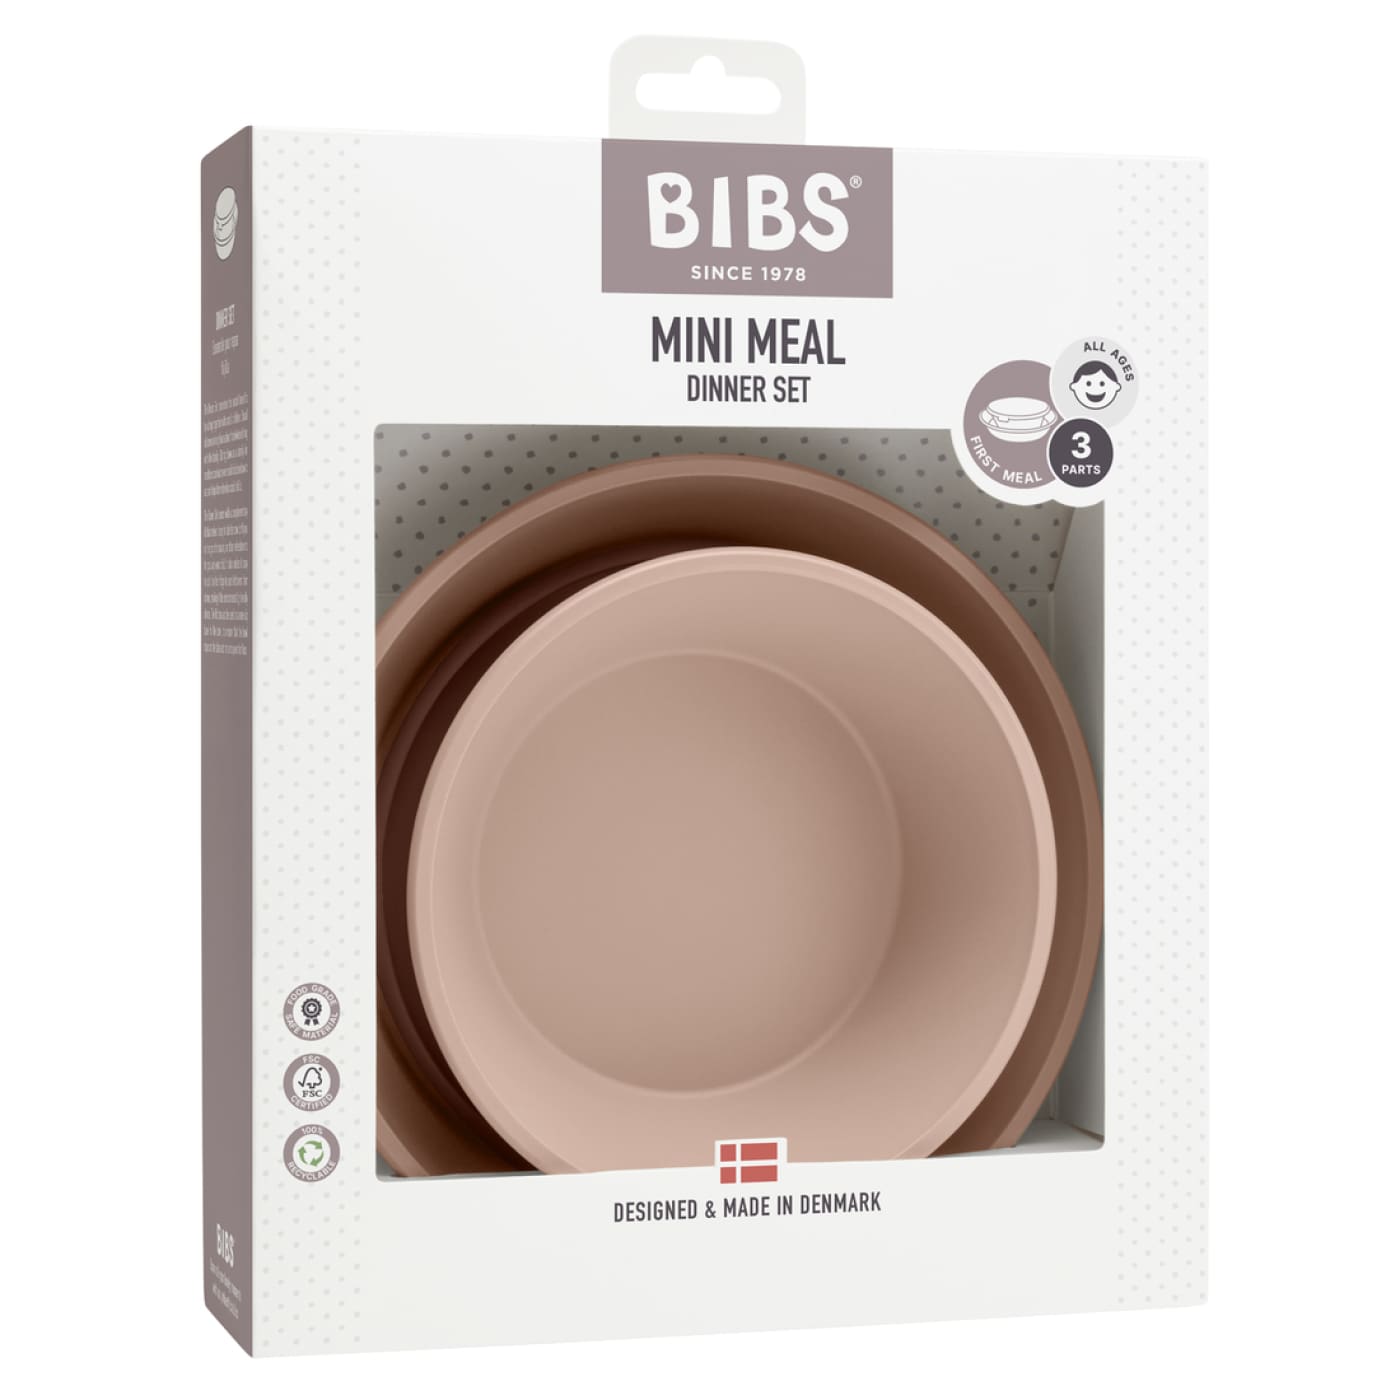 BIBS Dinner Plate Set - Blush - Blush - NURSING & FEEDING - CUTLERY/PLATES/BOWLS/TOYS